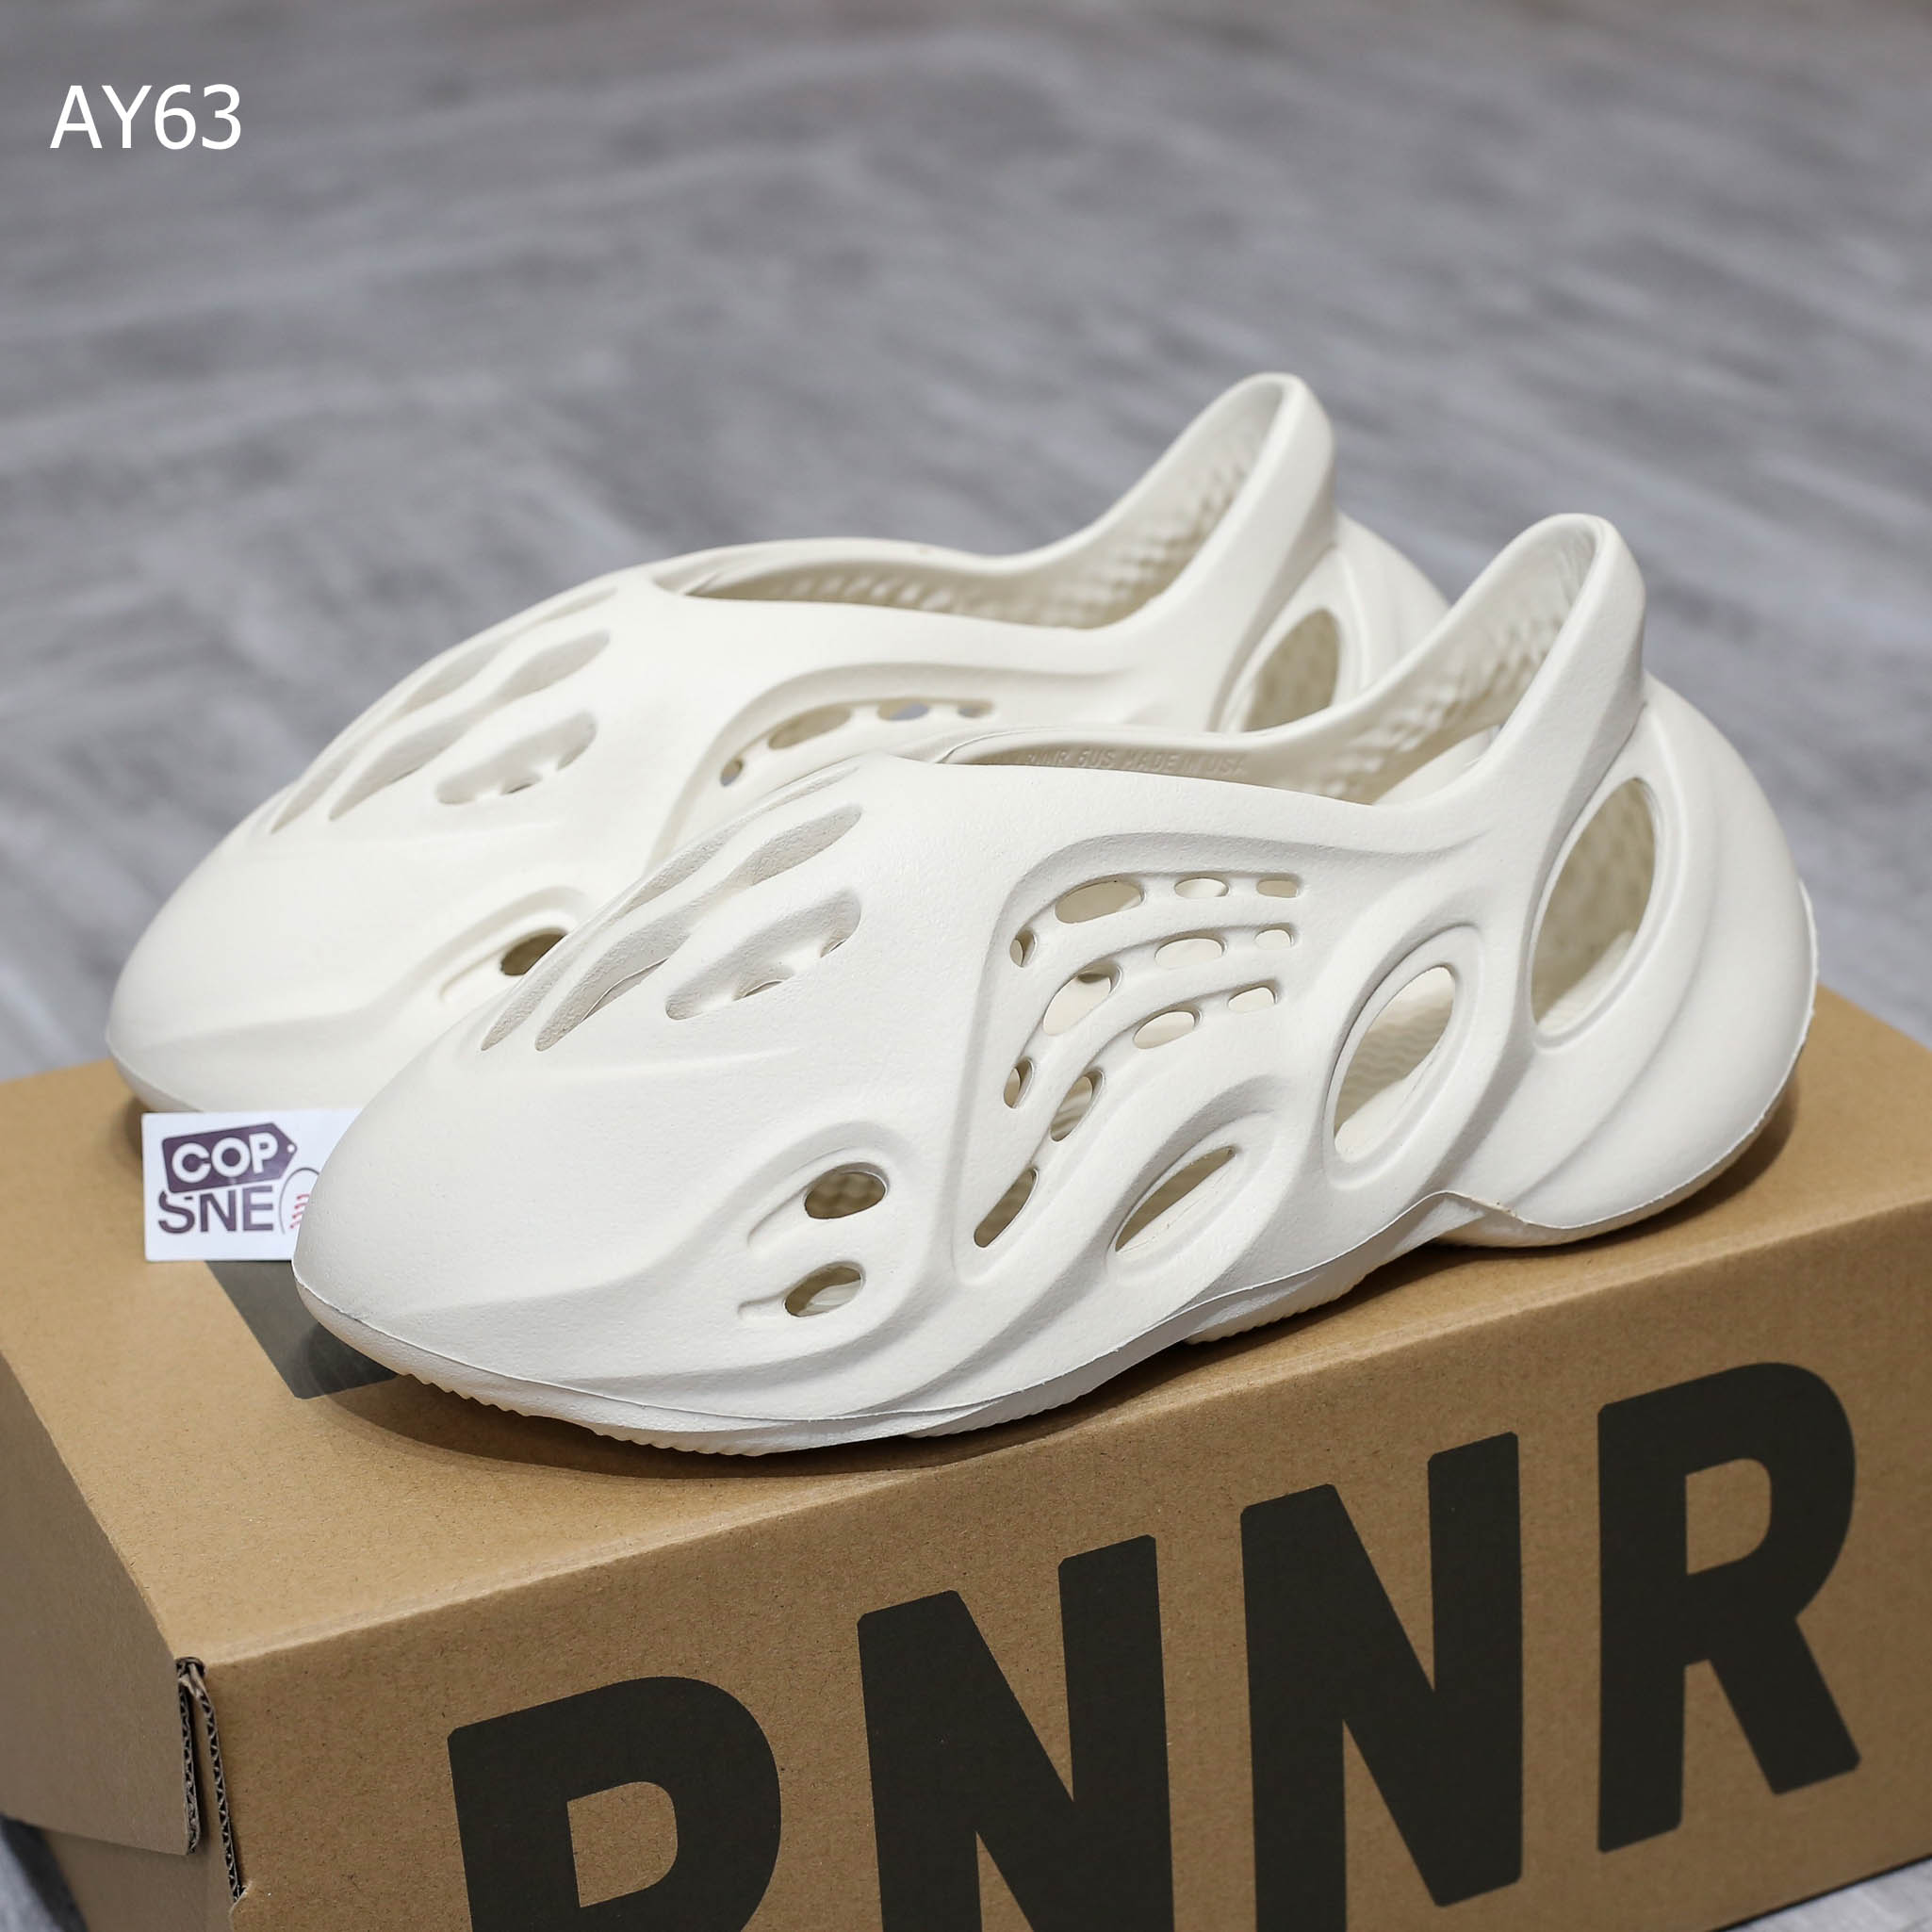 Giày Adidas Yeezy Foam Runner ‘Sand’ Rep 1:1